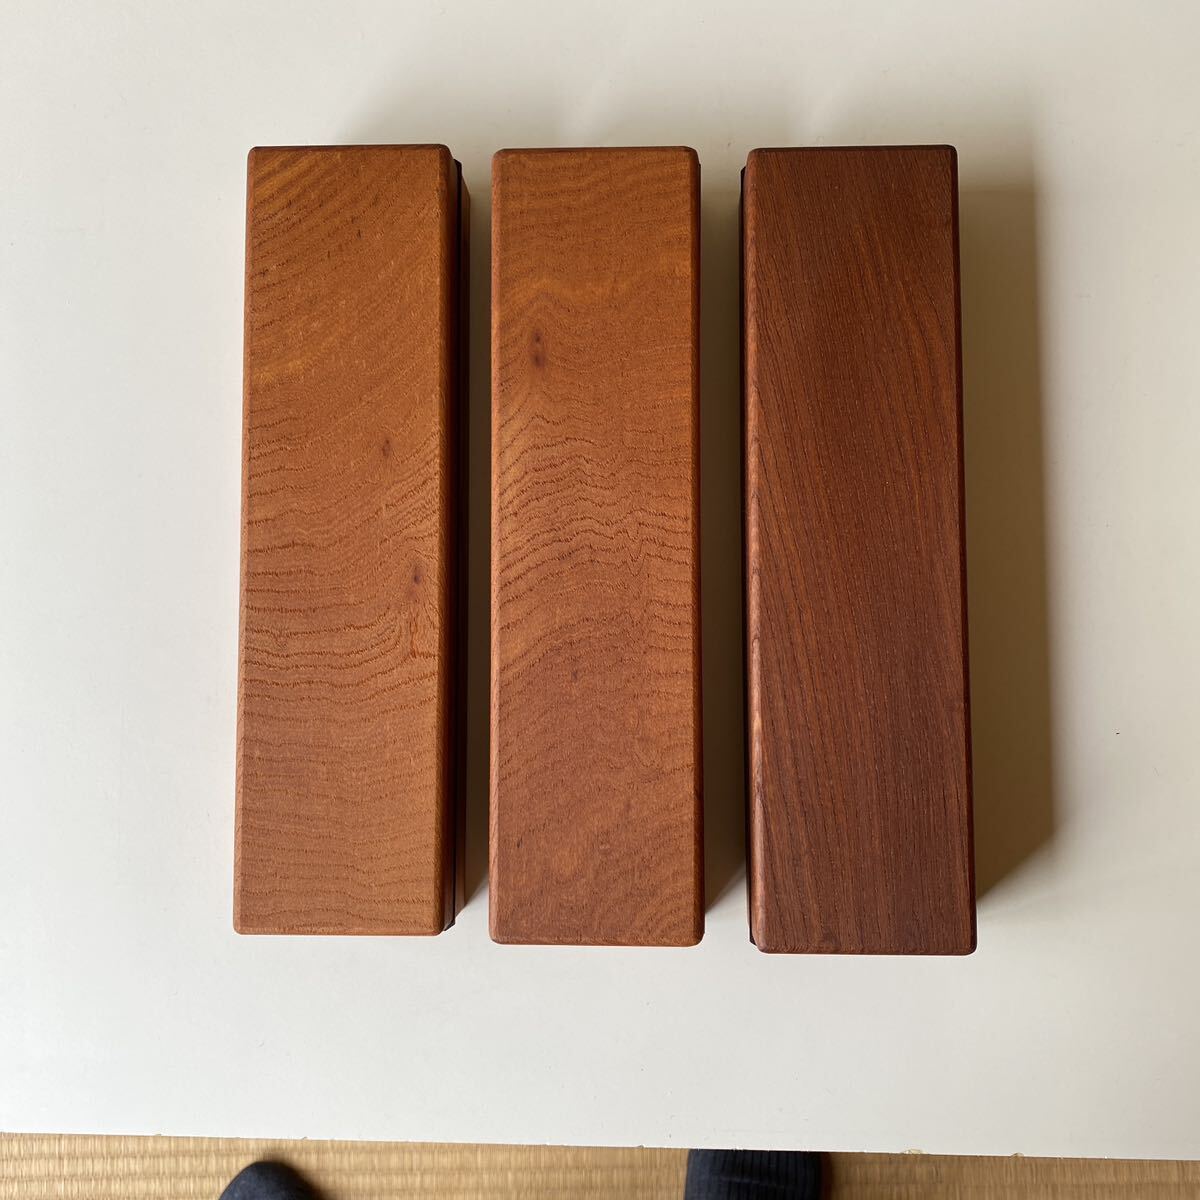  zelkova made small pattern box kiseru box new goods unused 3 piece inside size 24.2x5.7 centimeter 